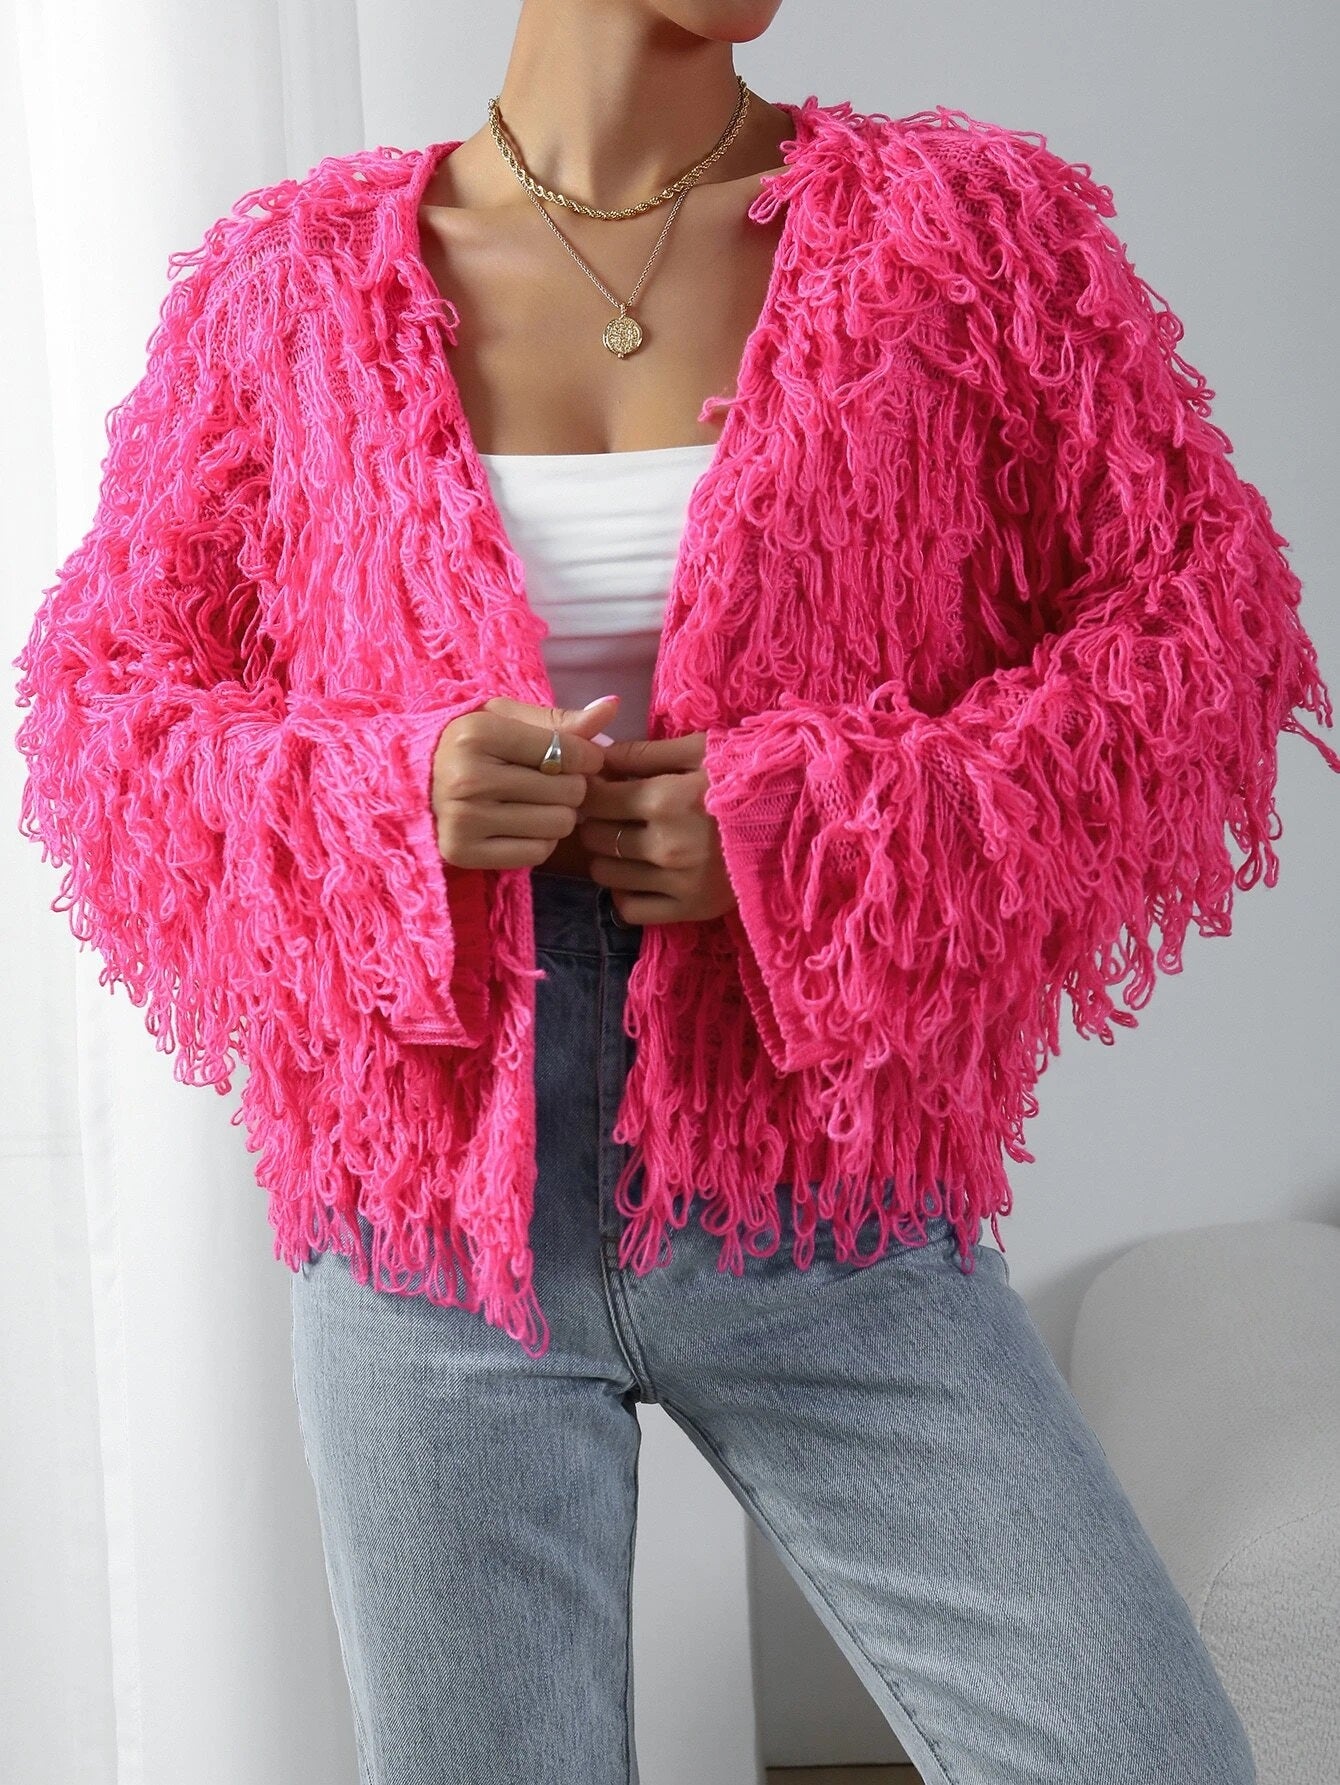 CM-CS366971 Women Casual Seoul Style Long Sleeve Shaggy Knit Duster Cardigan - Hot Pink